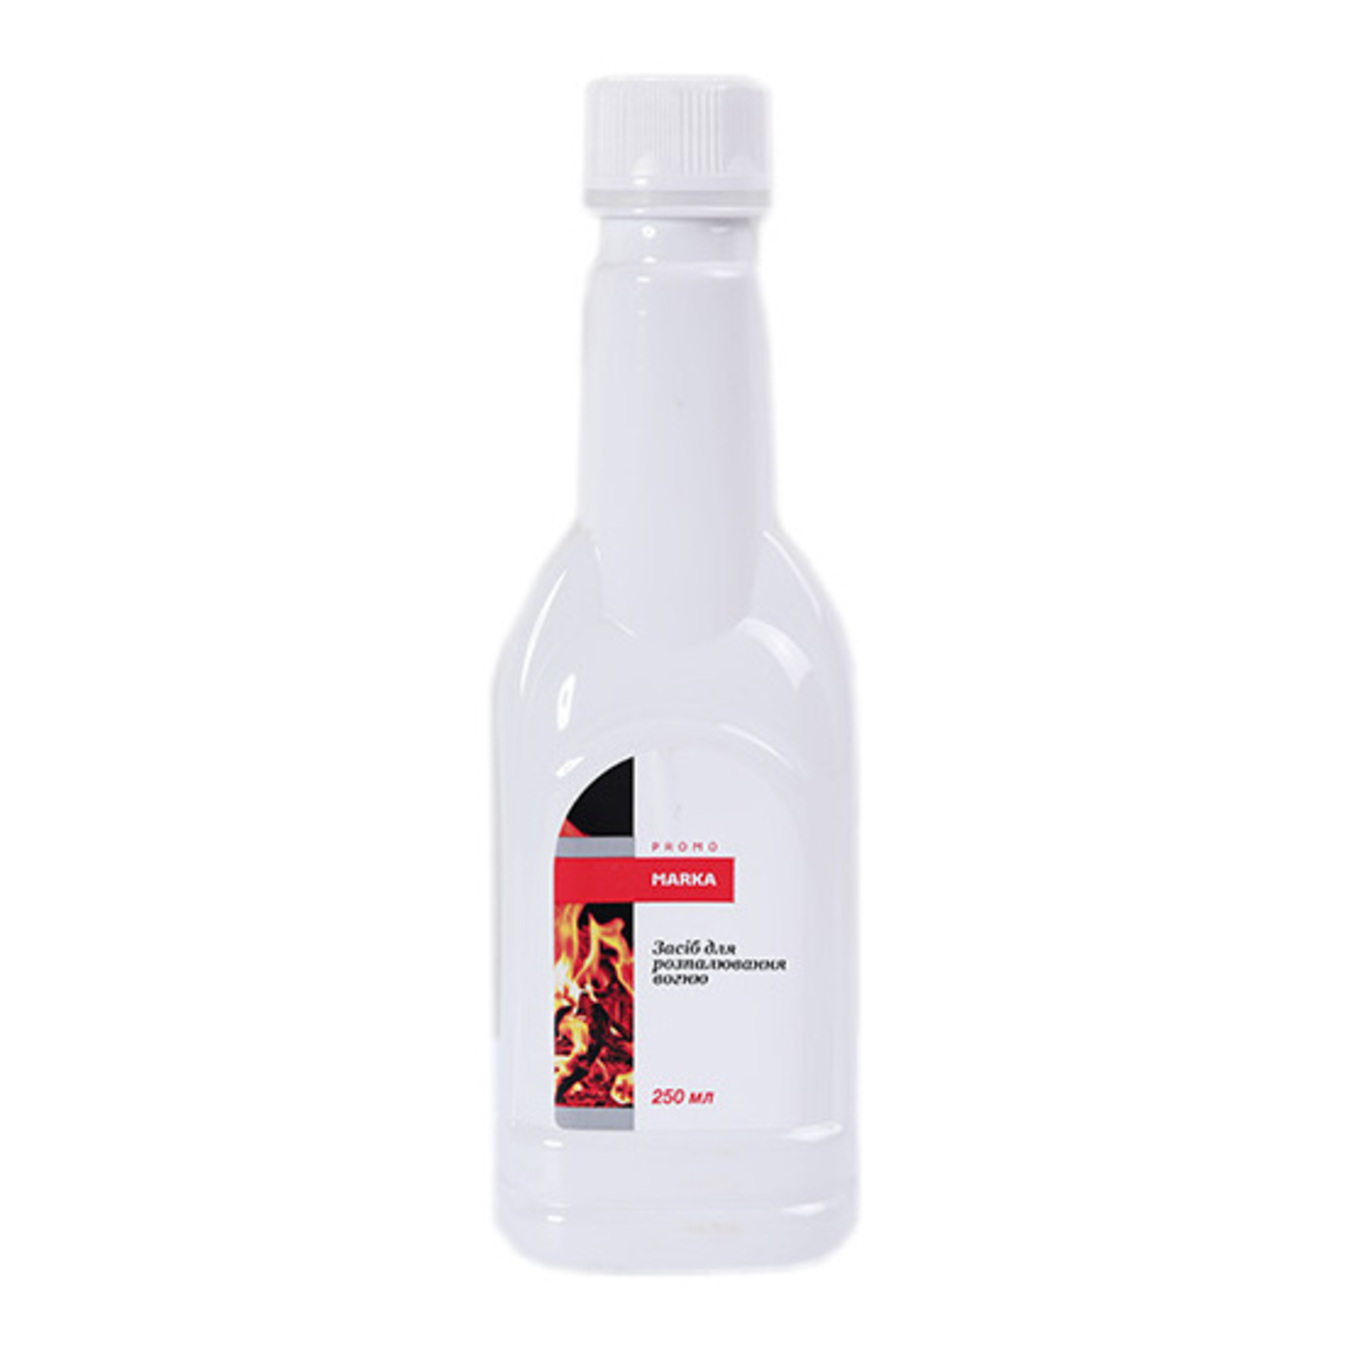 Marka Promo Liquid for kindling 250 ml